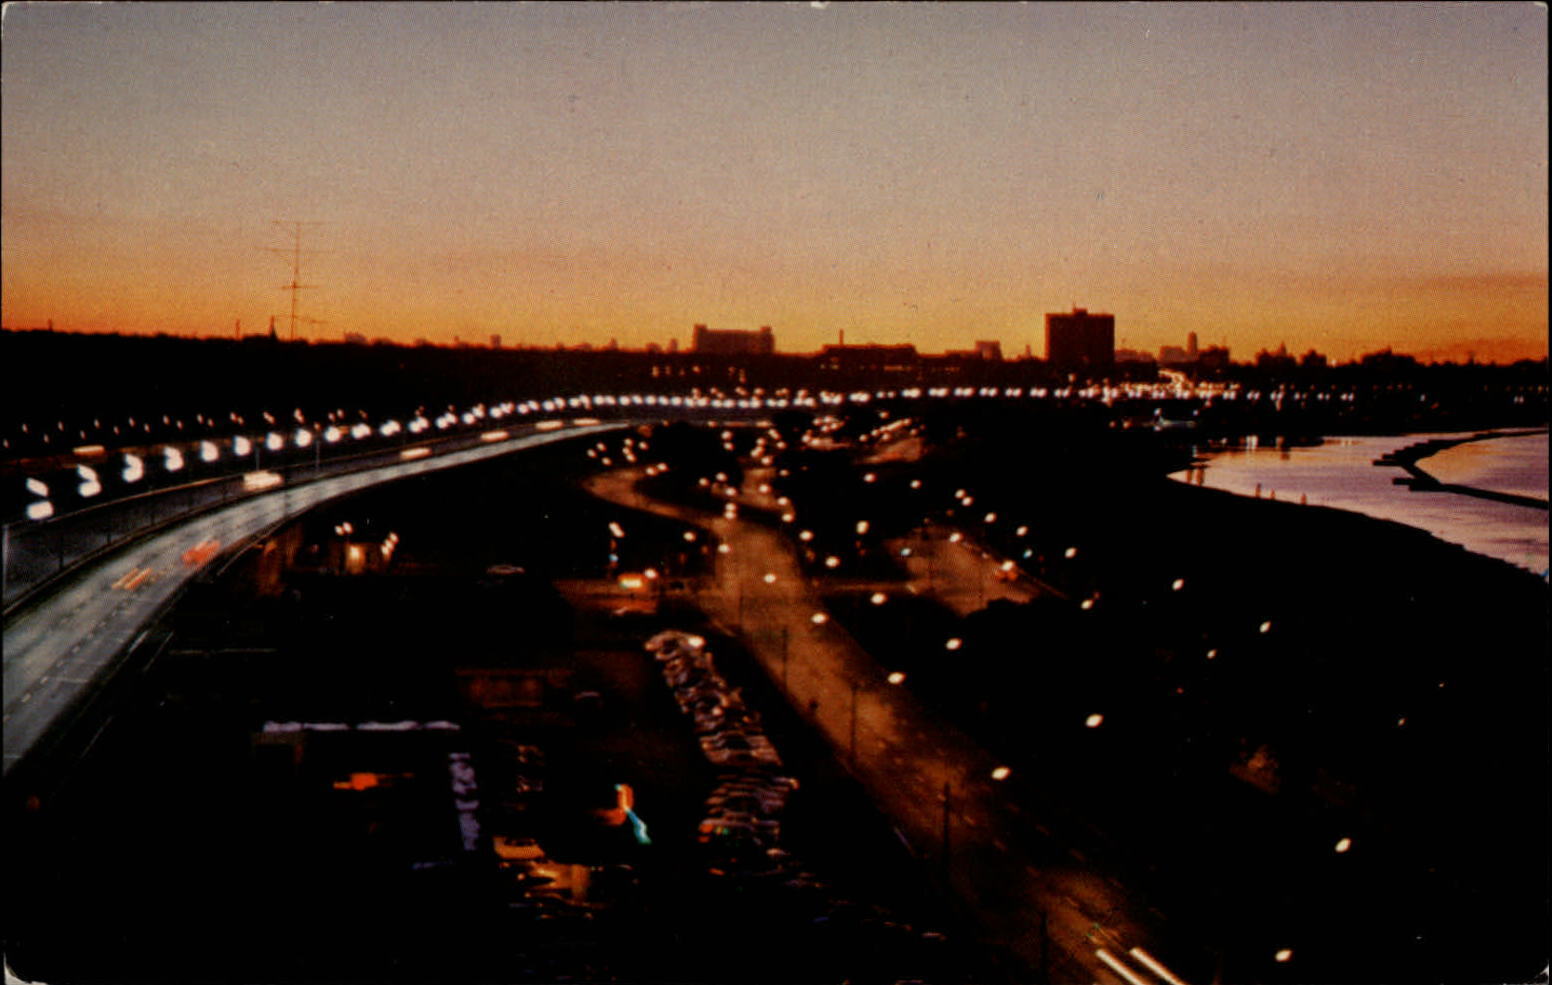 Lakeshore Blvd Toronto Ontario Canada time lapse night aerial view ~ 1950s-60s